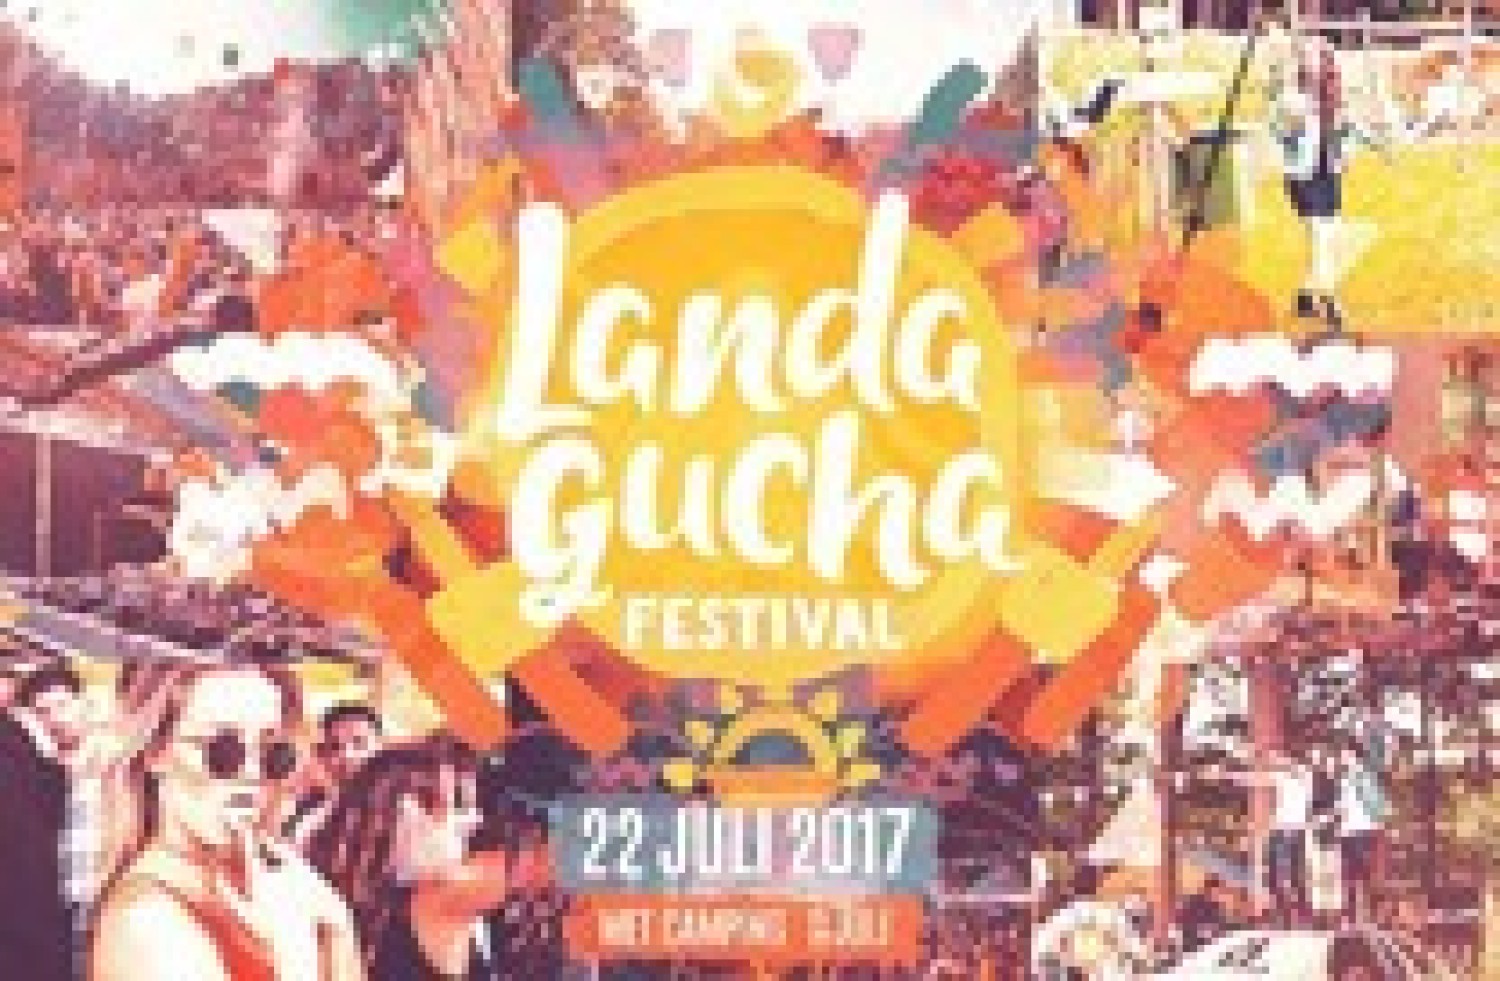 Party nieuws: LandaGucha Festival 2017 start kaartverkoop!